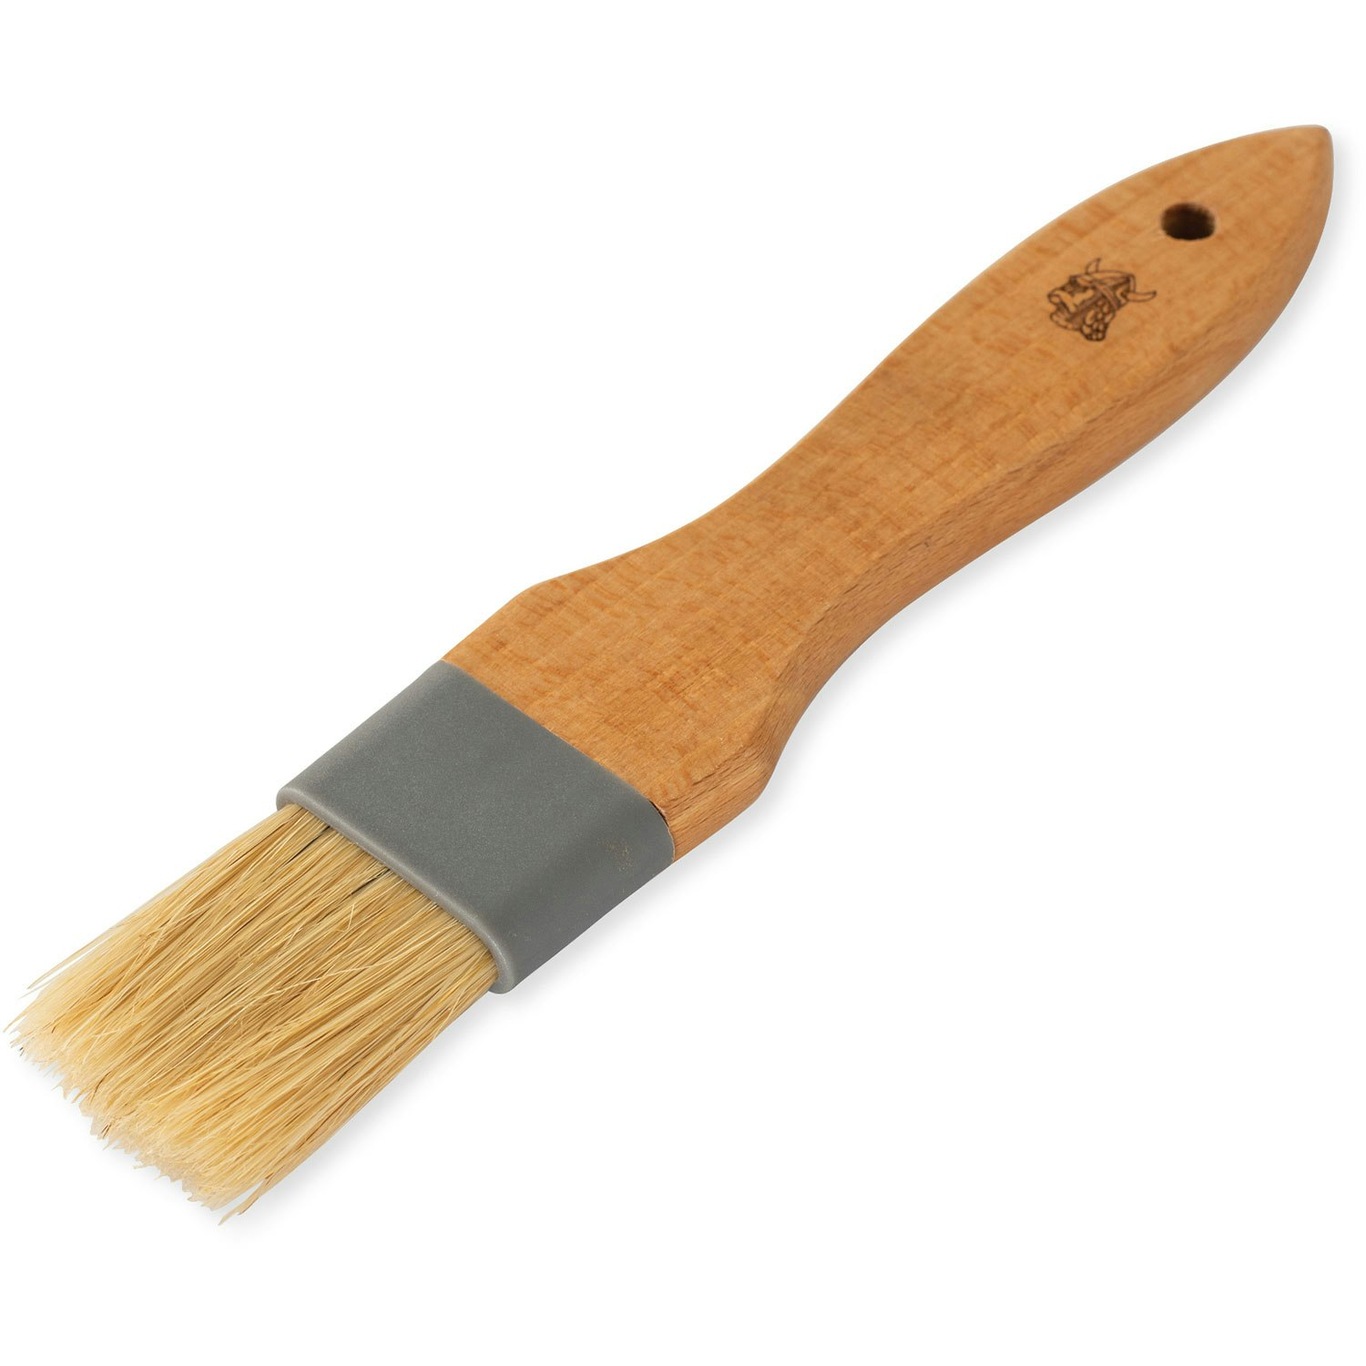 https://royaldesign.com/image/2/nordic-ware-back-brush-in-wood-0?w=800&quality=80